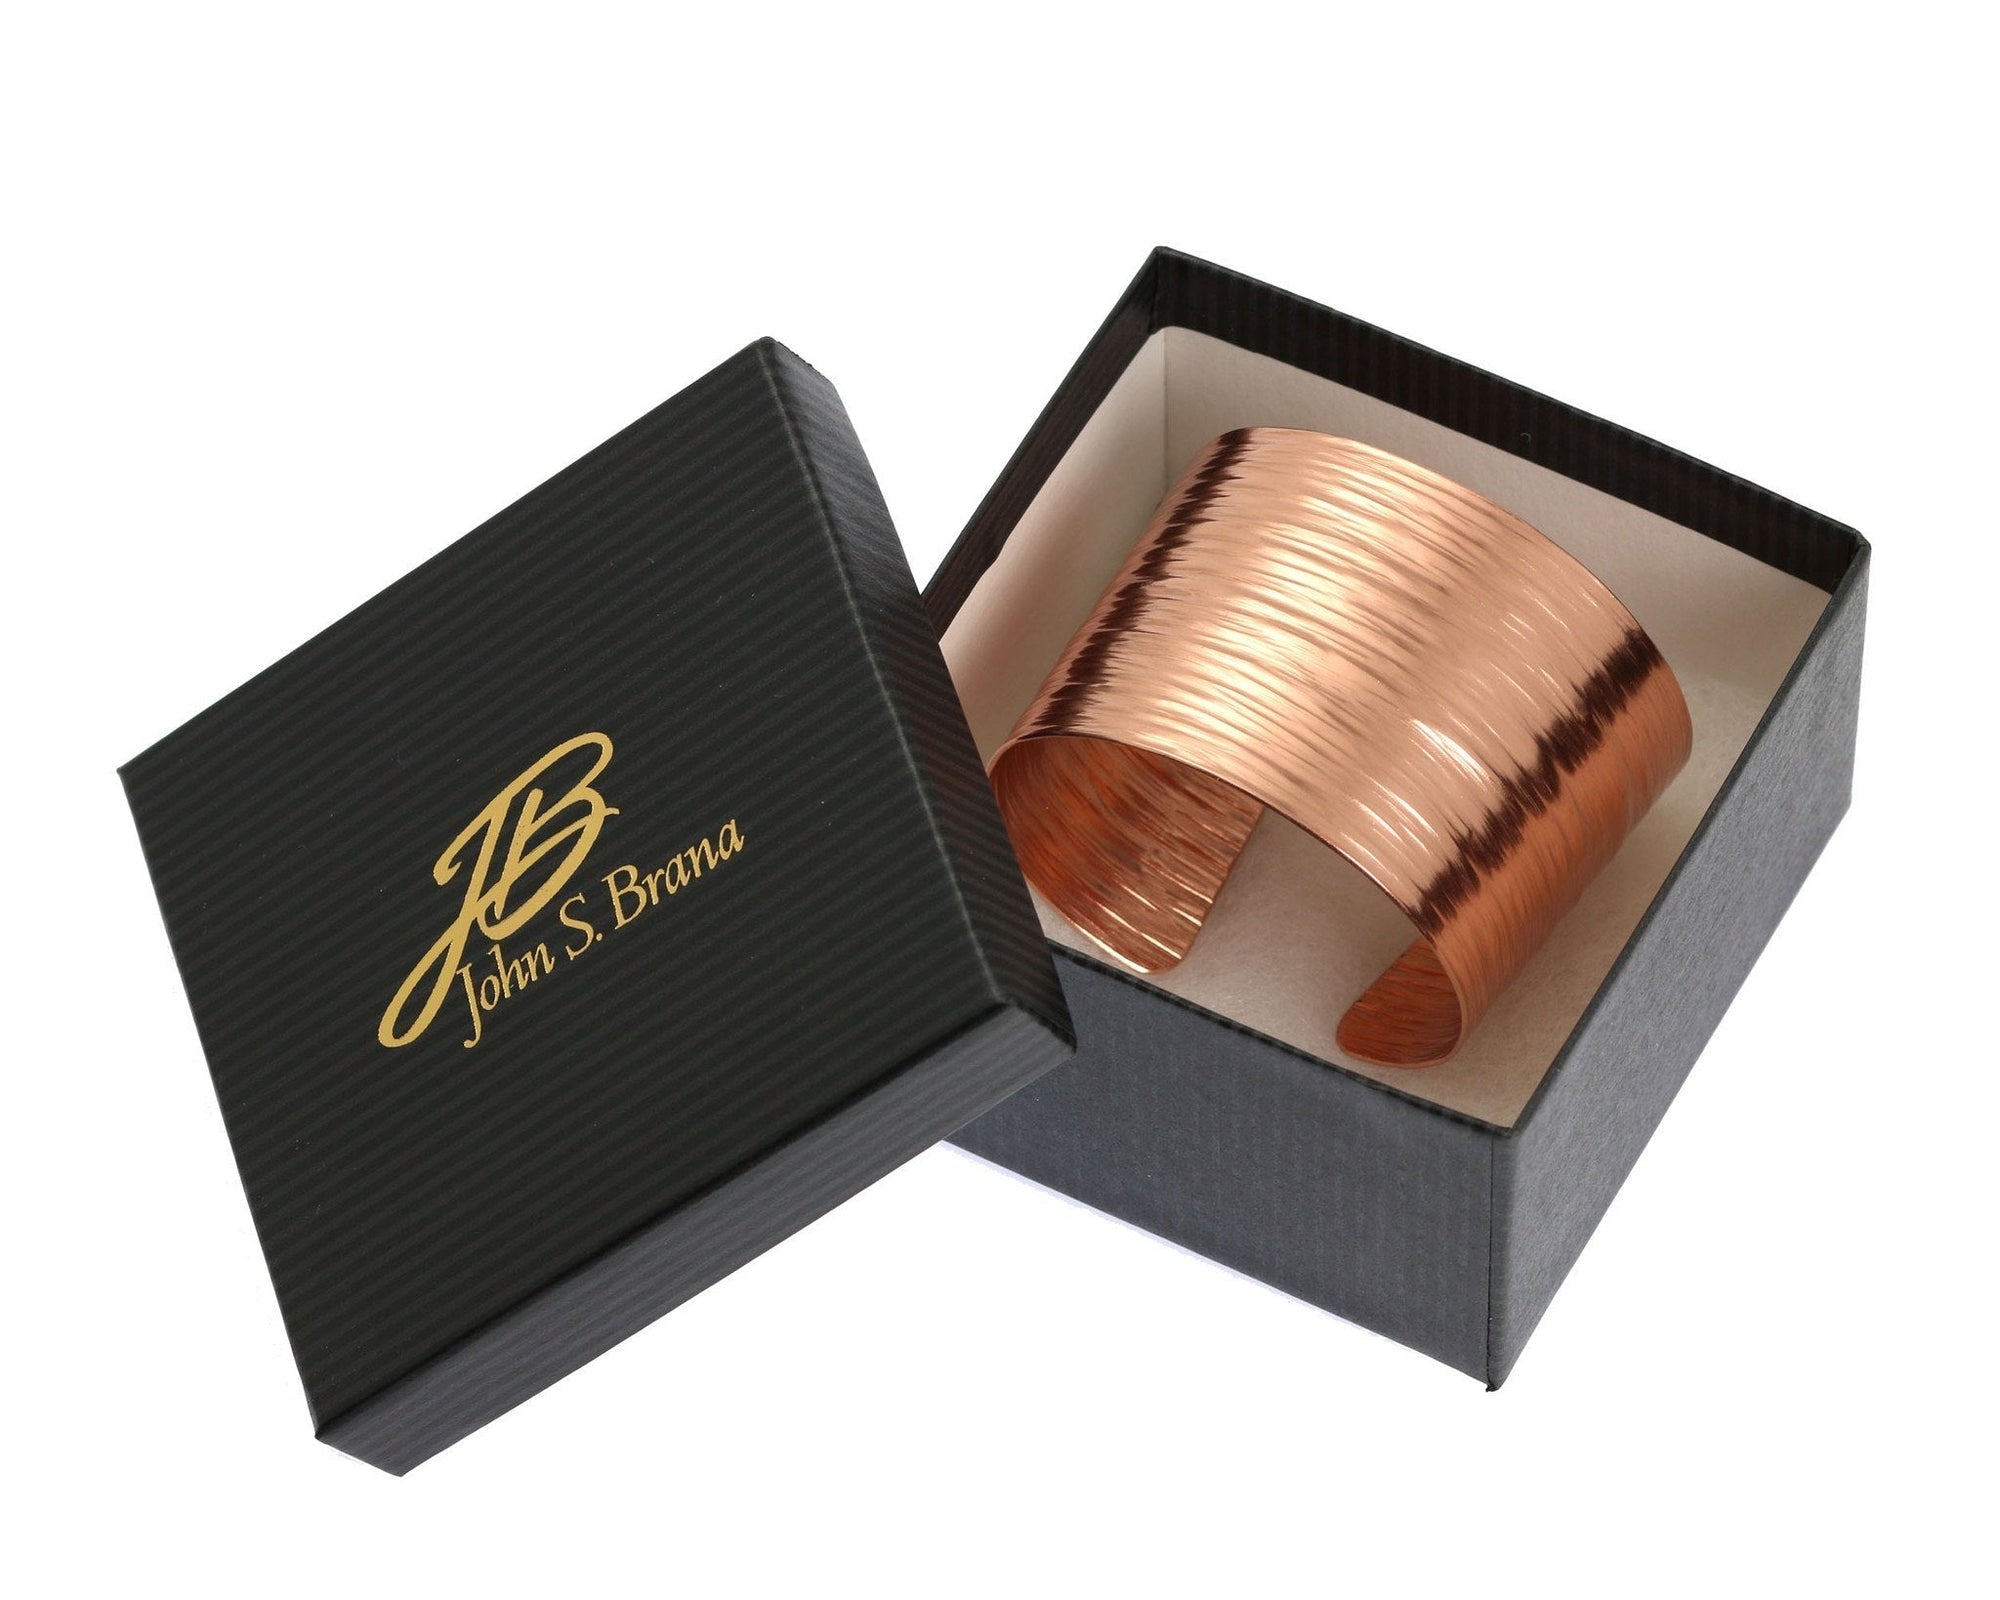 Chased Copper Bark Cuff Bracelet in Black Gift Box